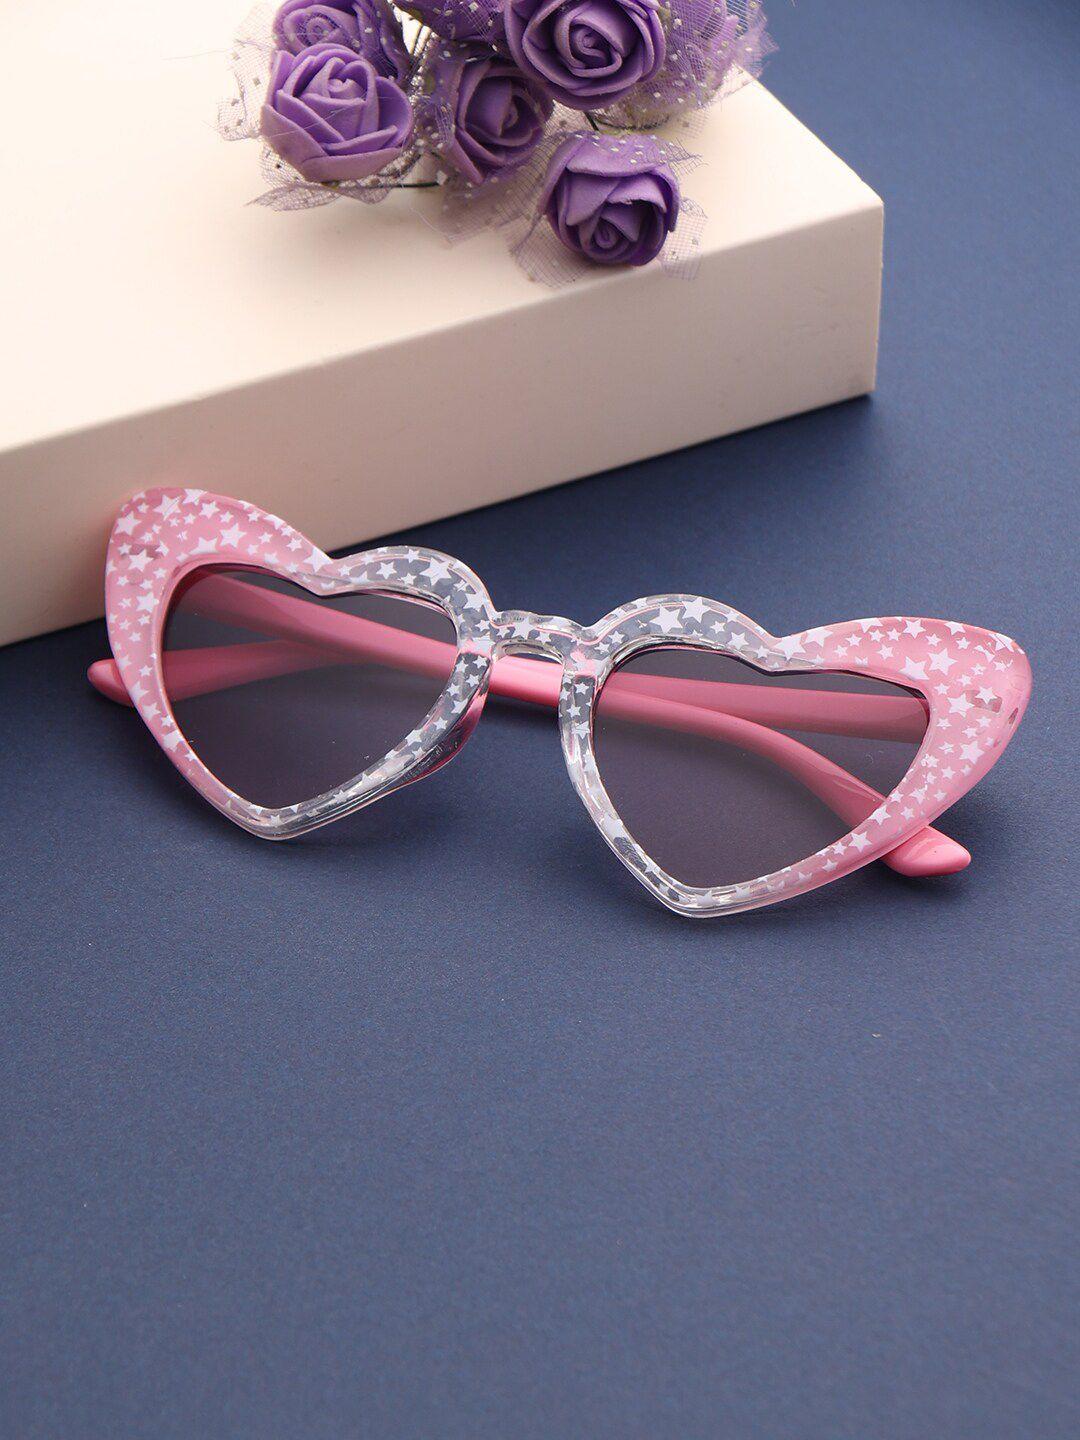 passion-petals-girl-heart-sunglasses-polarised-and-uv-lens-11-10pinksunglasses